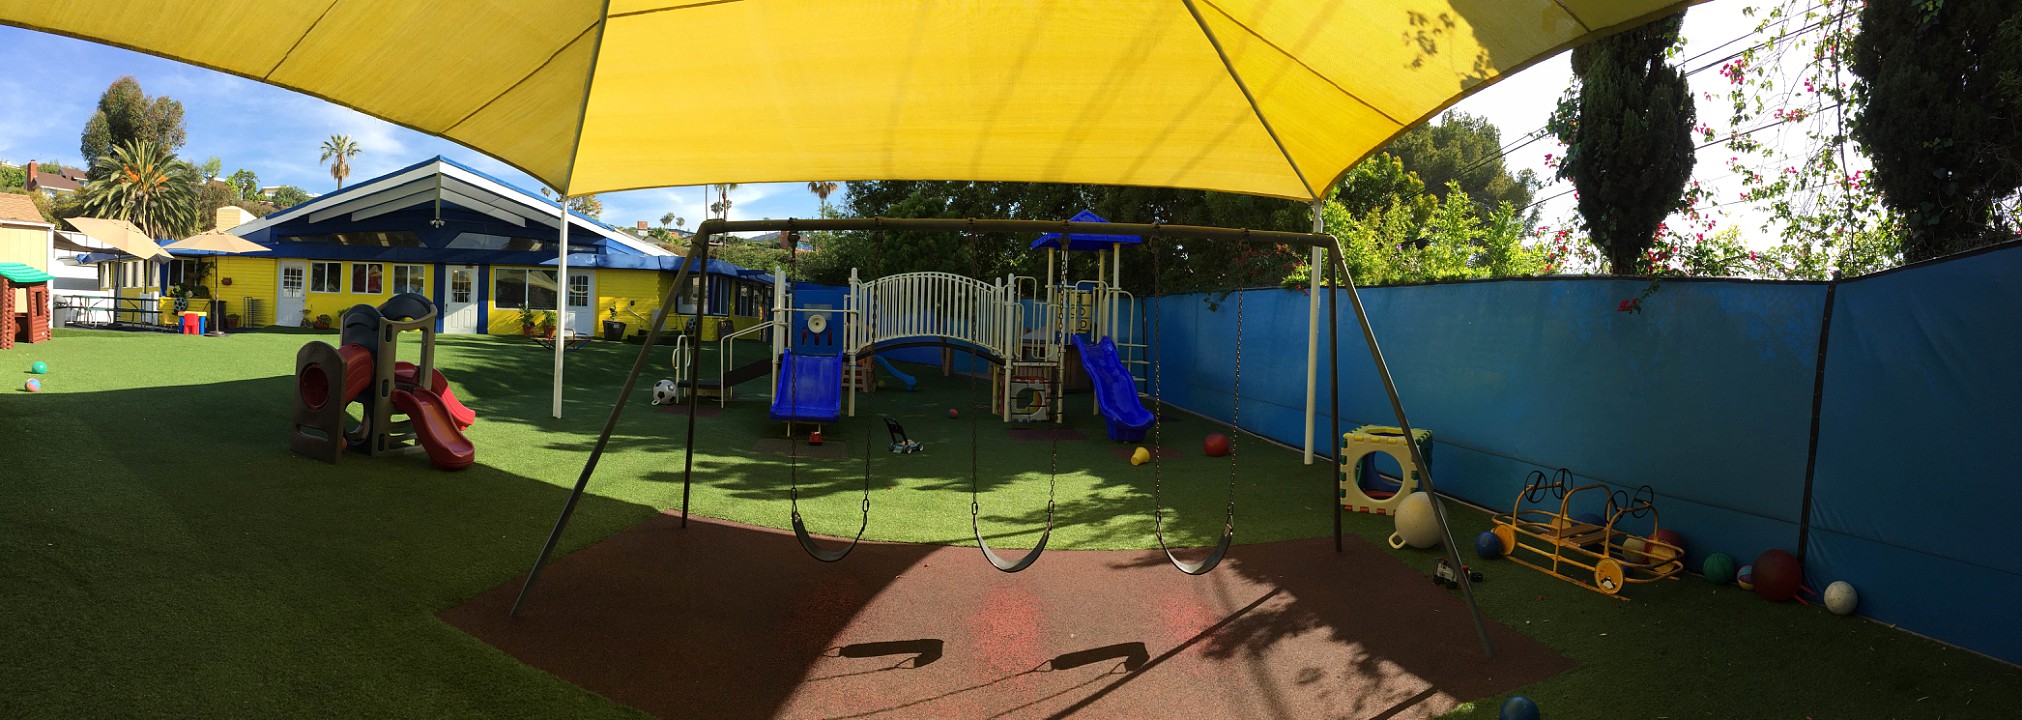 Playing area of palisades montessori center